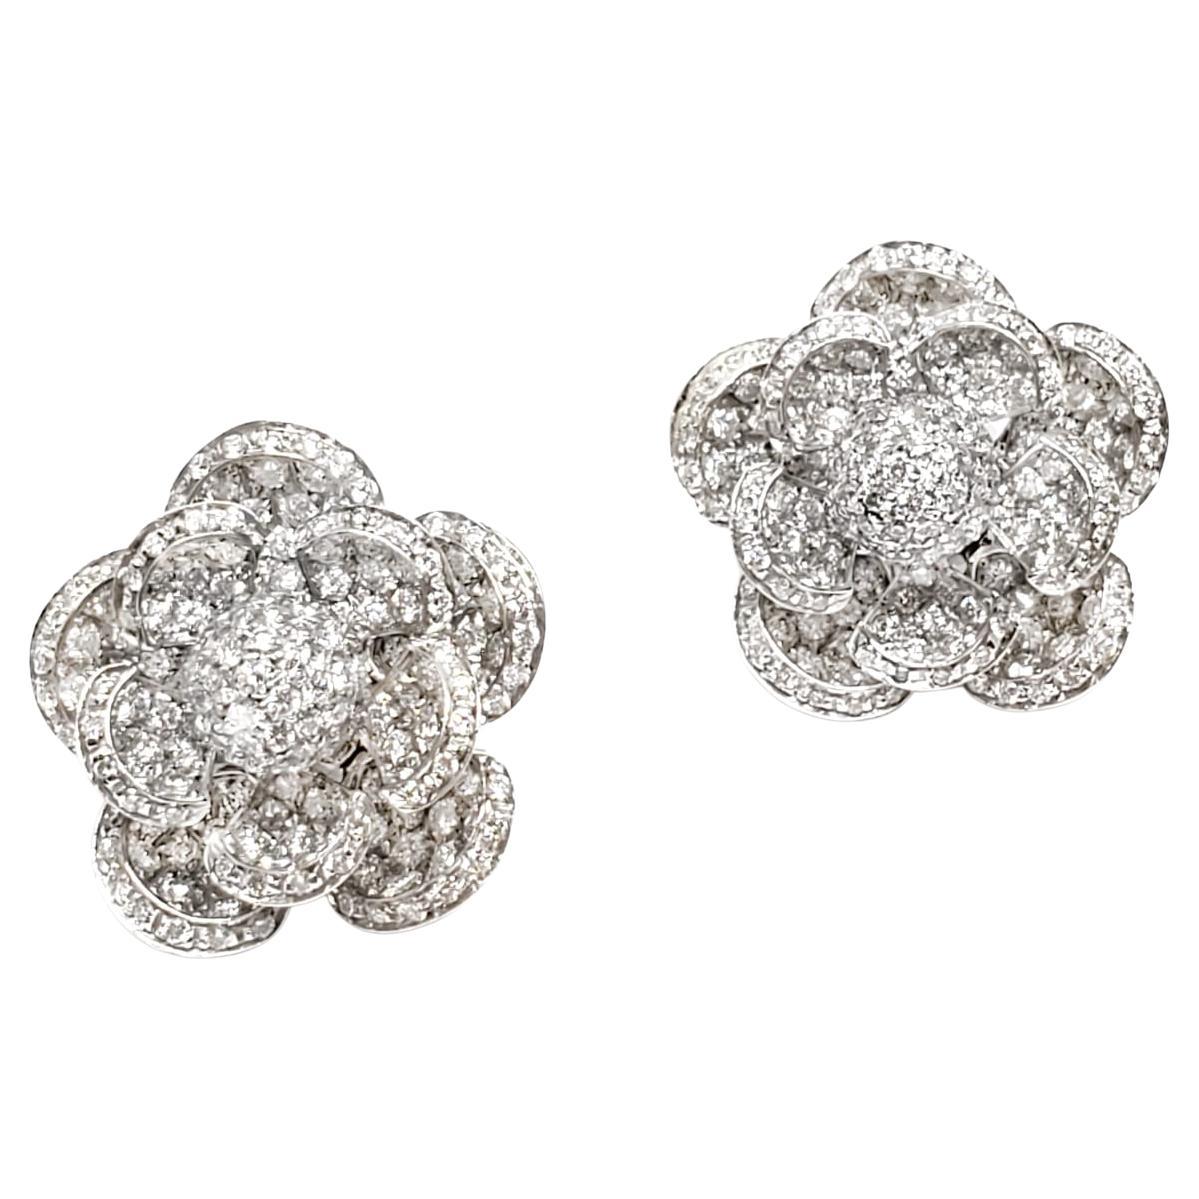 Andreoli Boucles d'oreilles fleurs en or blanc 18 carats avec diamants de 4,99 carats